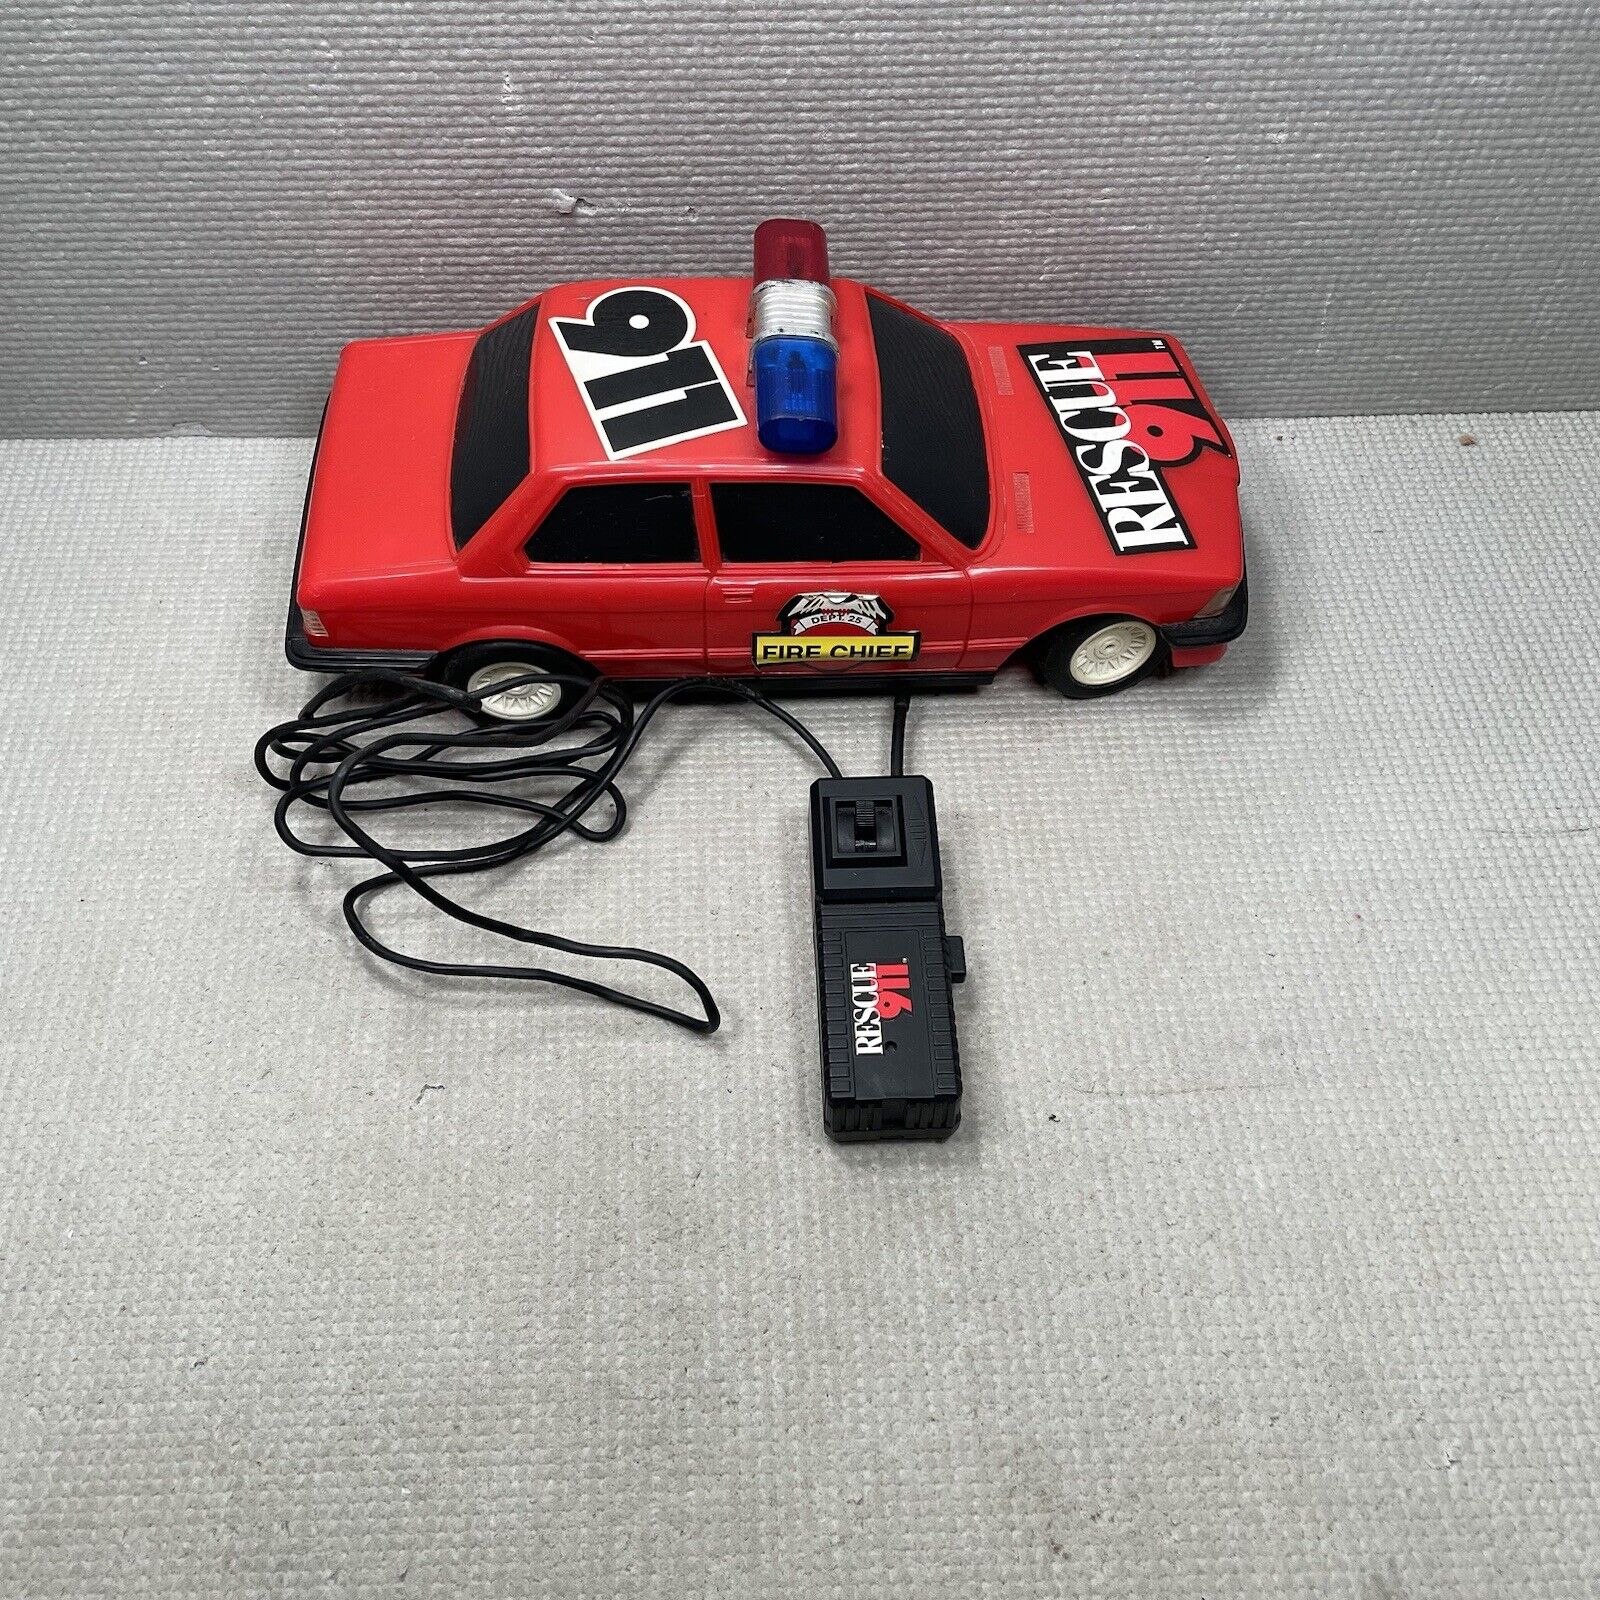 Marchon Fire Chief Remote Control Car Cord Untested 1993 Red 9-1-1